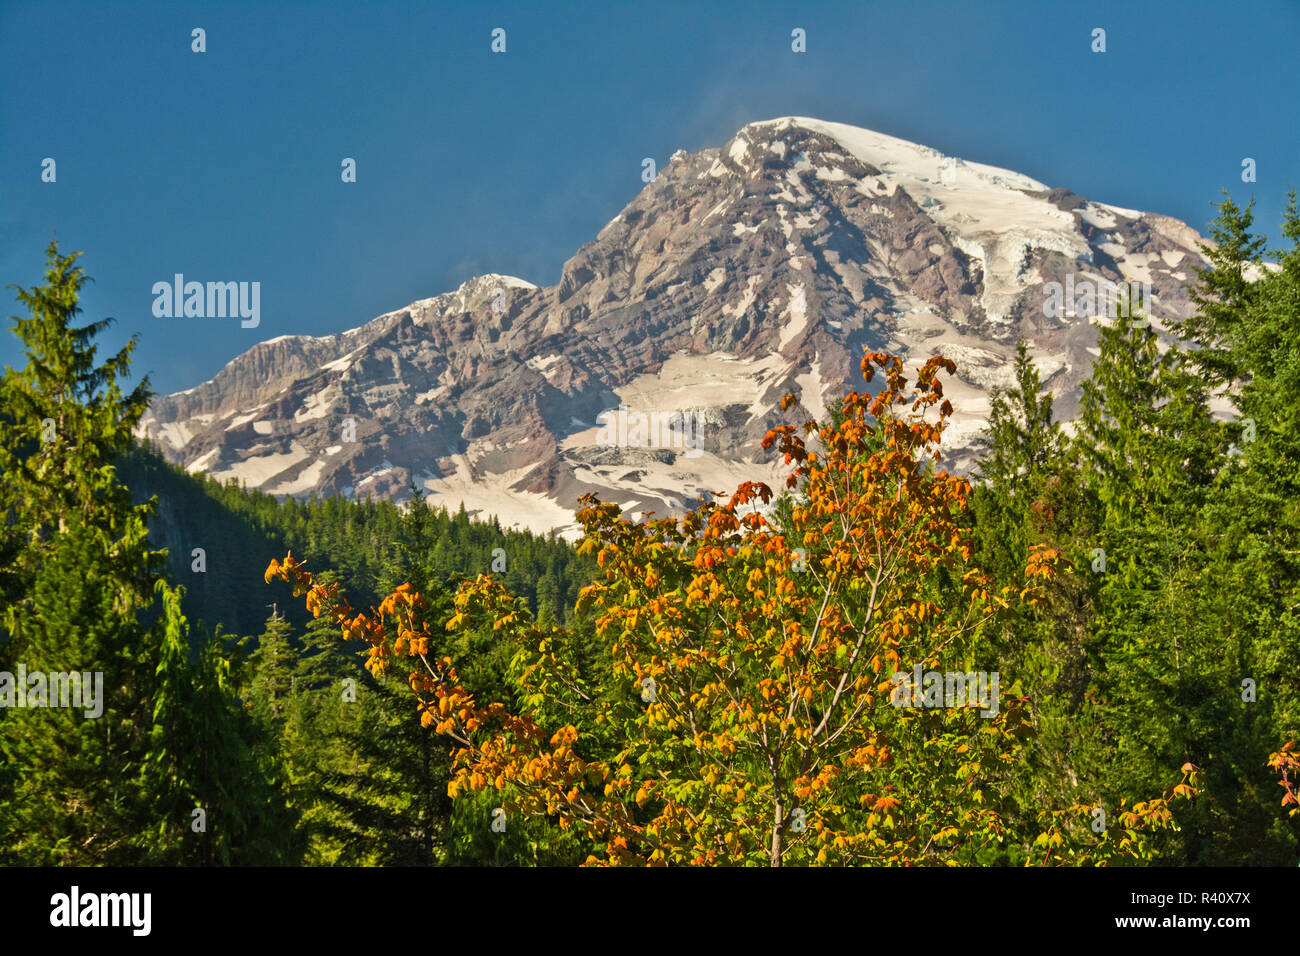 Mount Rainier from Longmire, Mount Rainier National Park, Washington State, USA Stock Photo